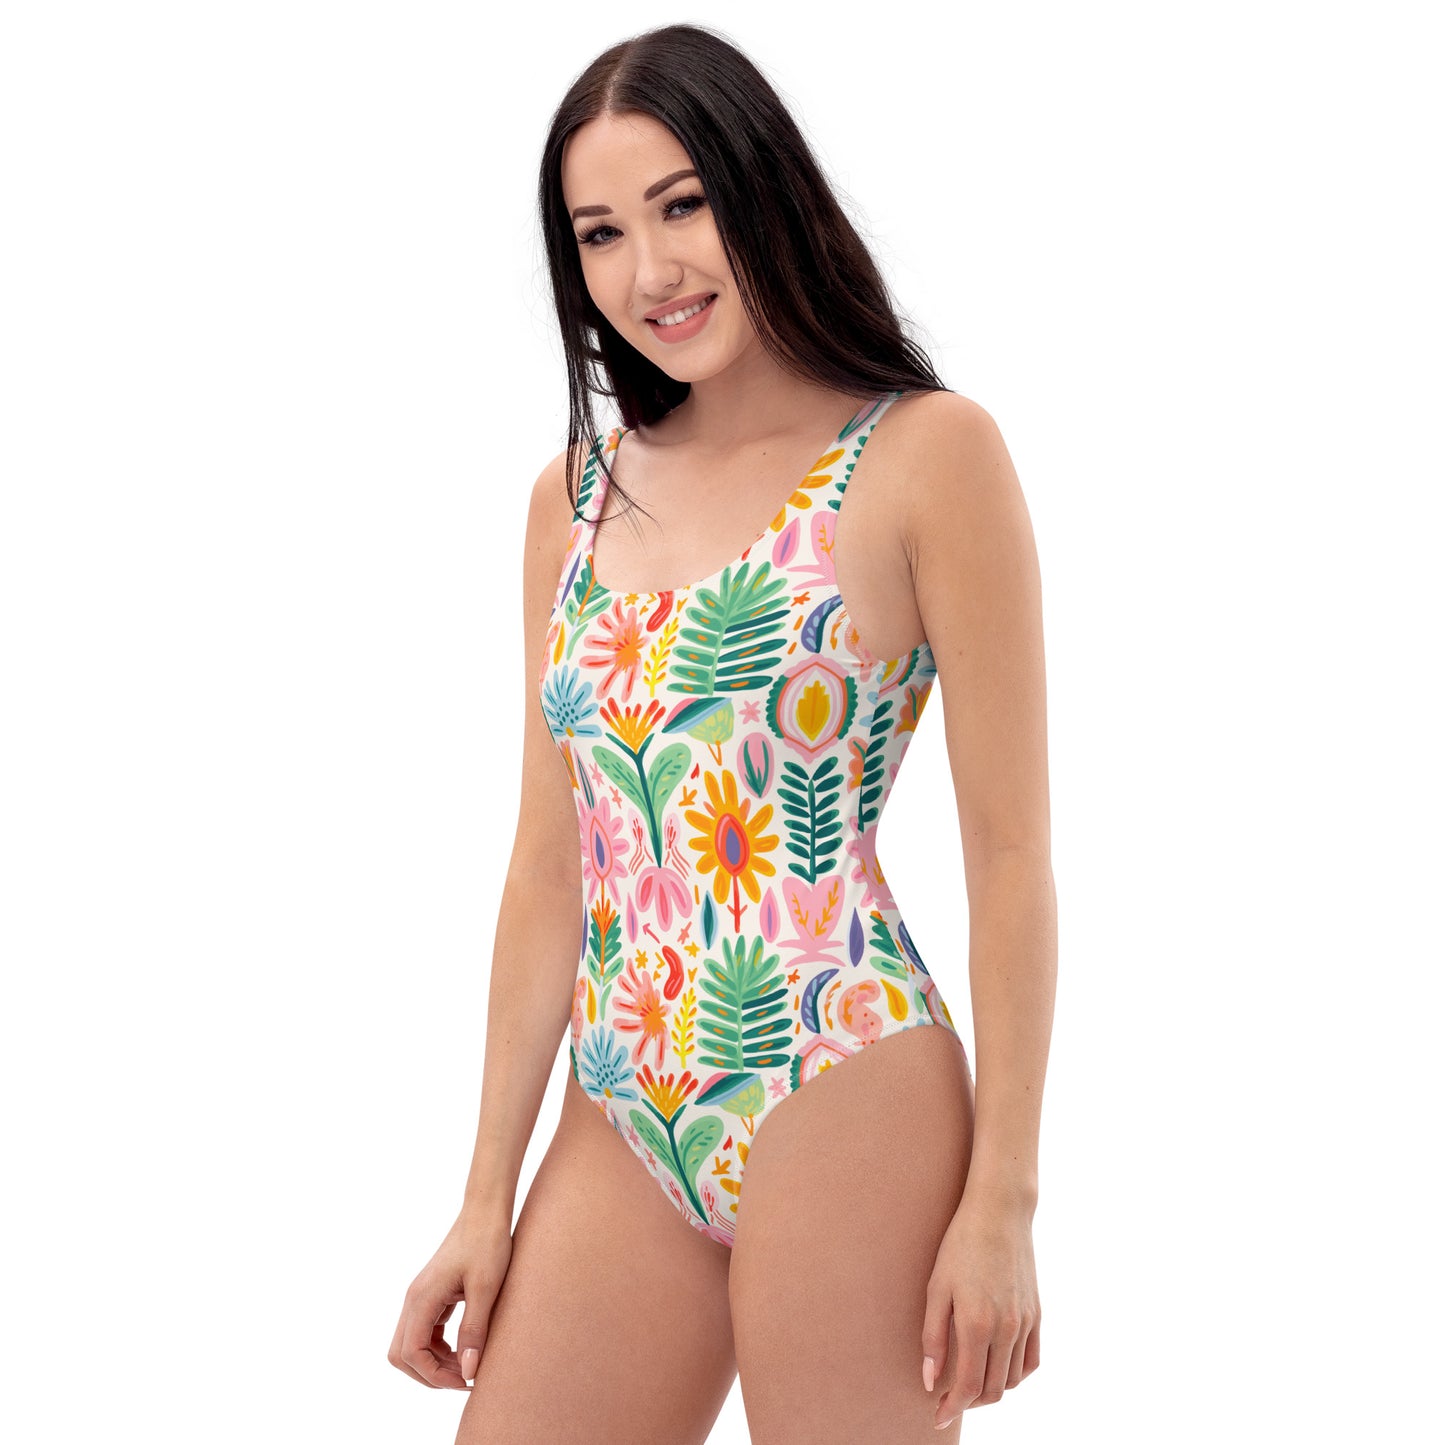 Marbella Classic One-Piece Swimsuit